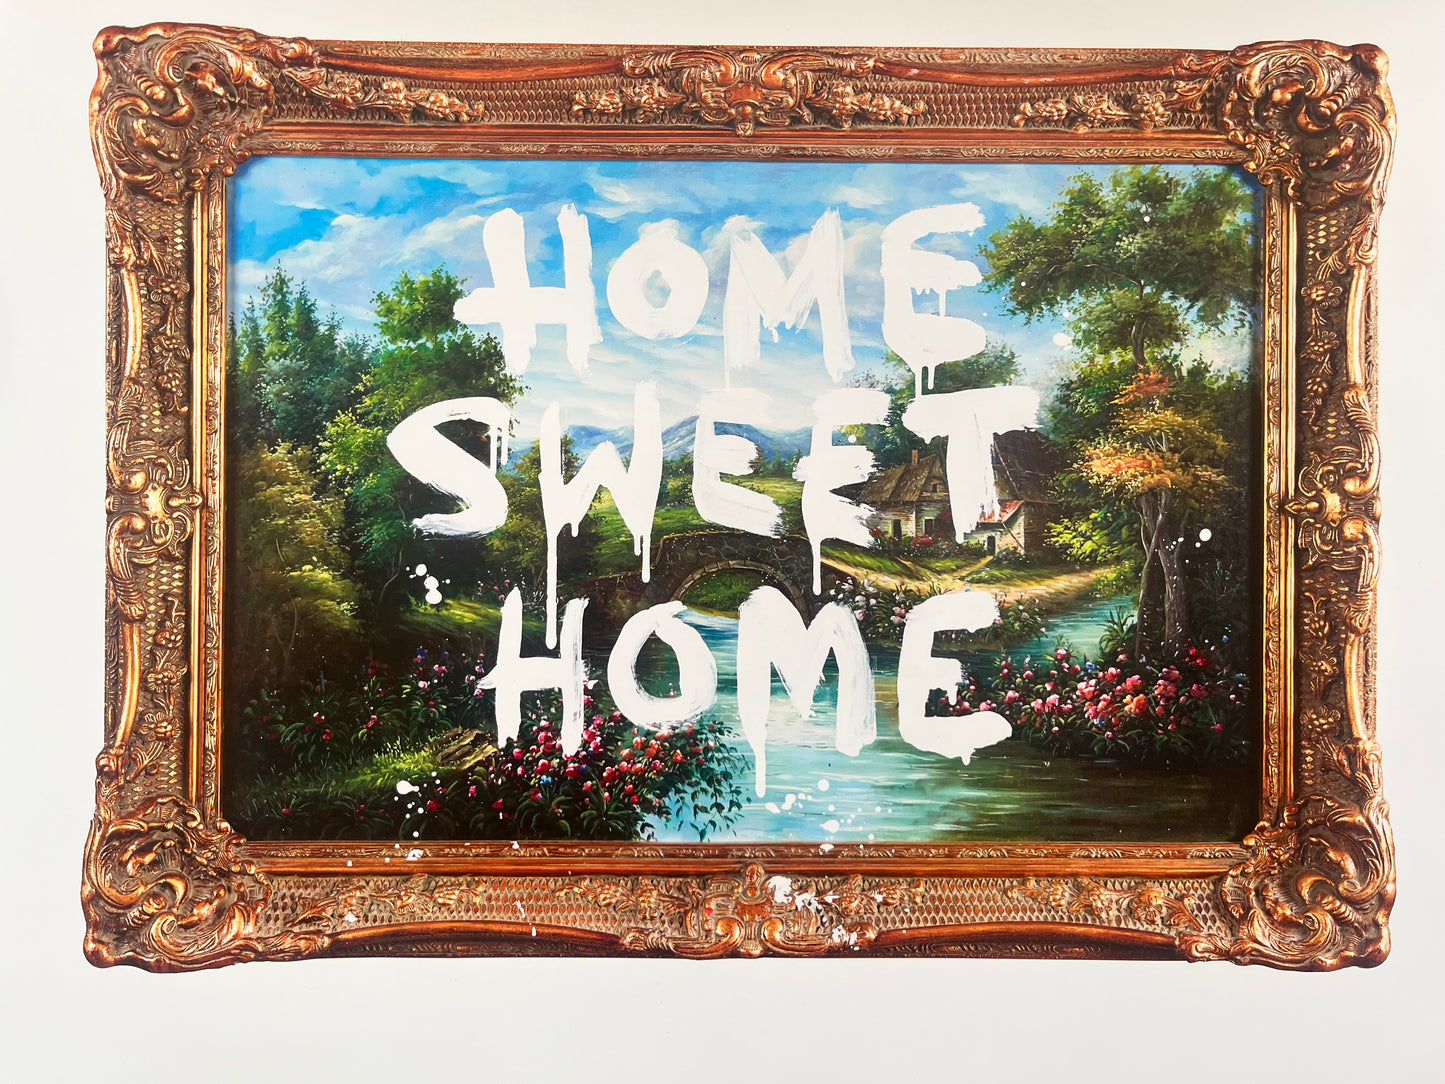 Sérigraphie Offset- BANKSY x MocoMuseum - Home Sweet Home